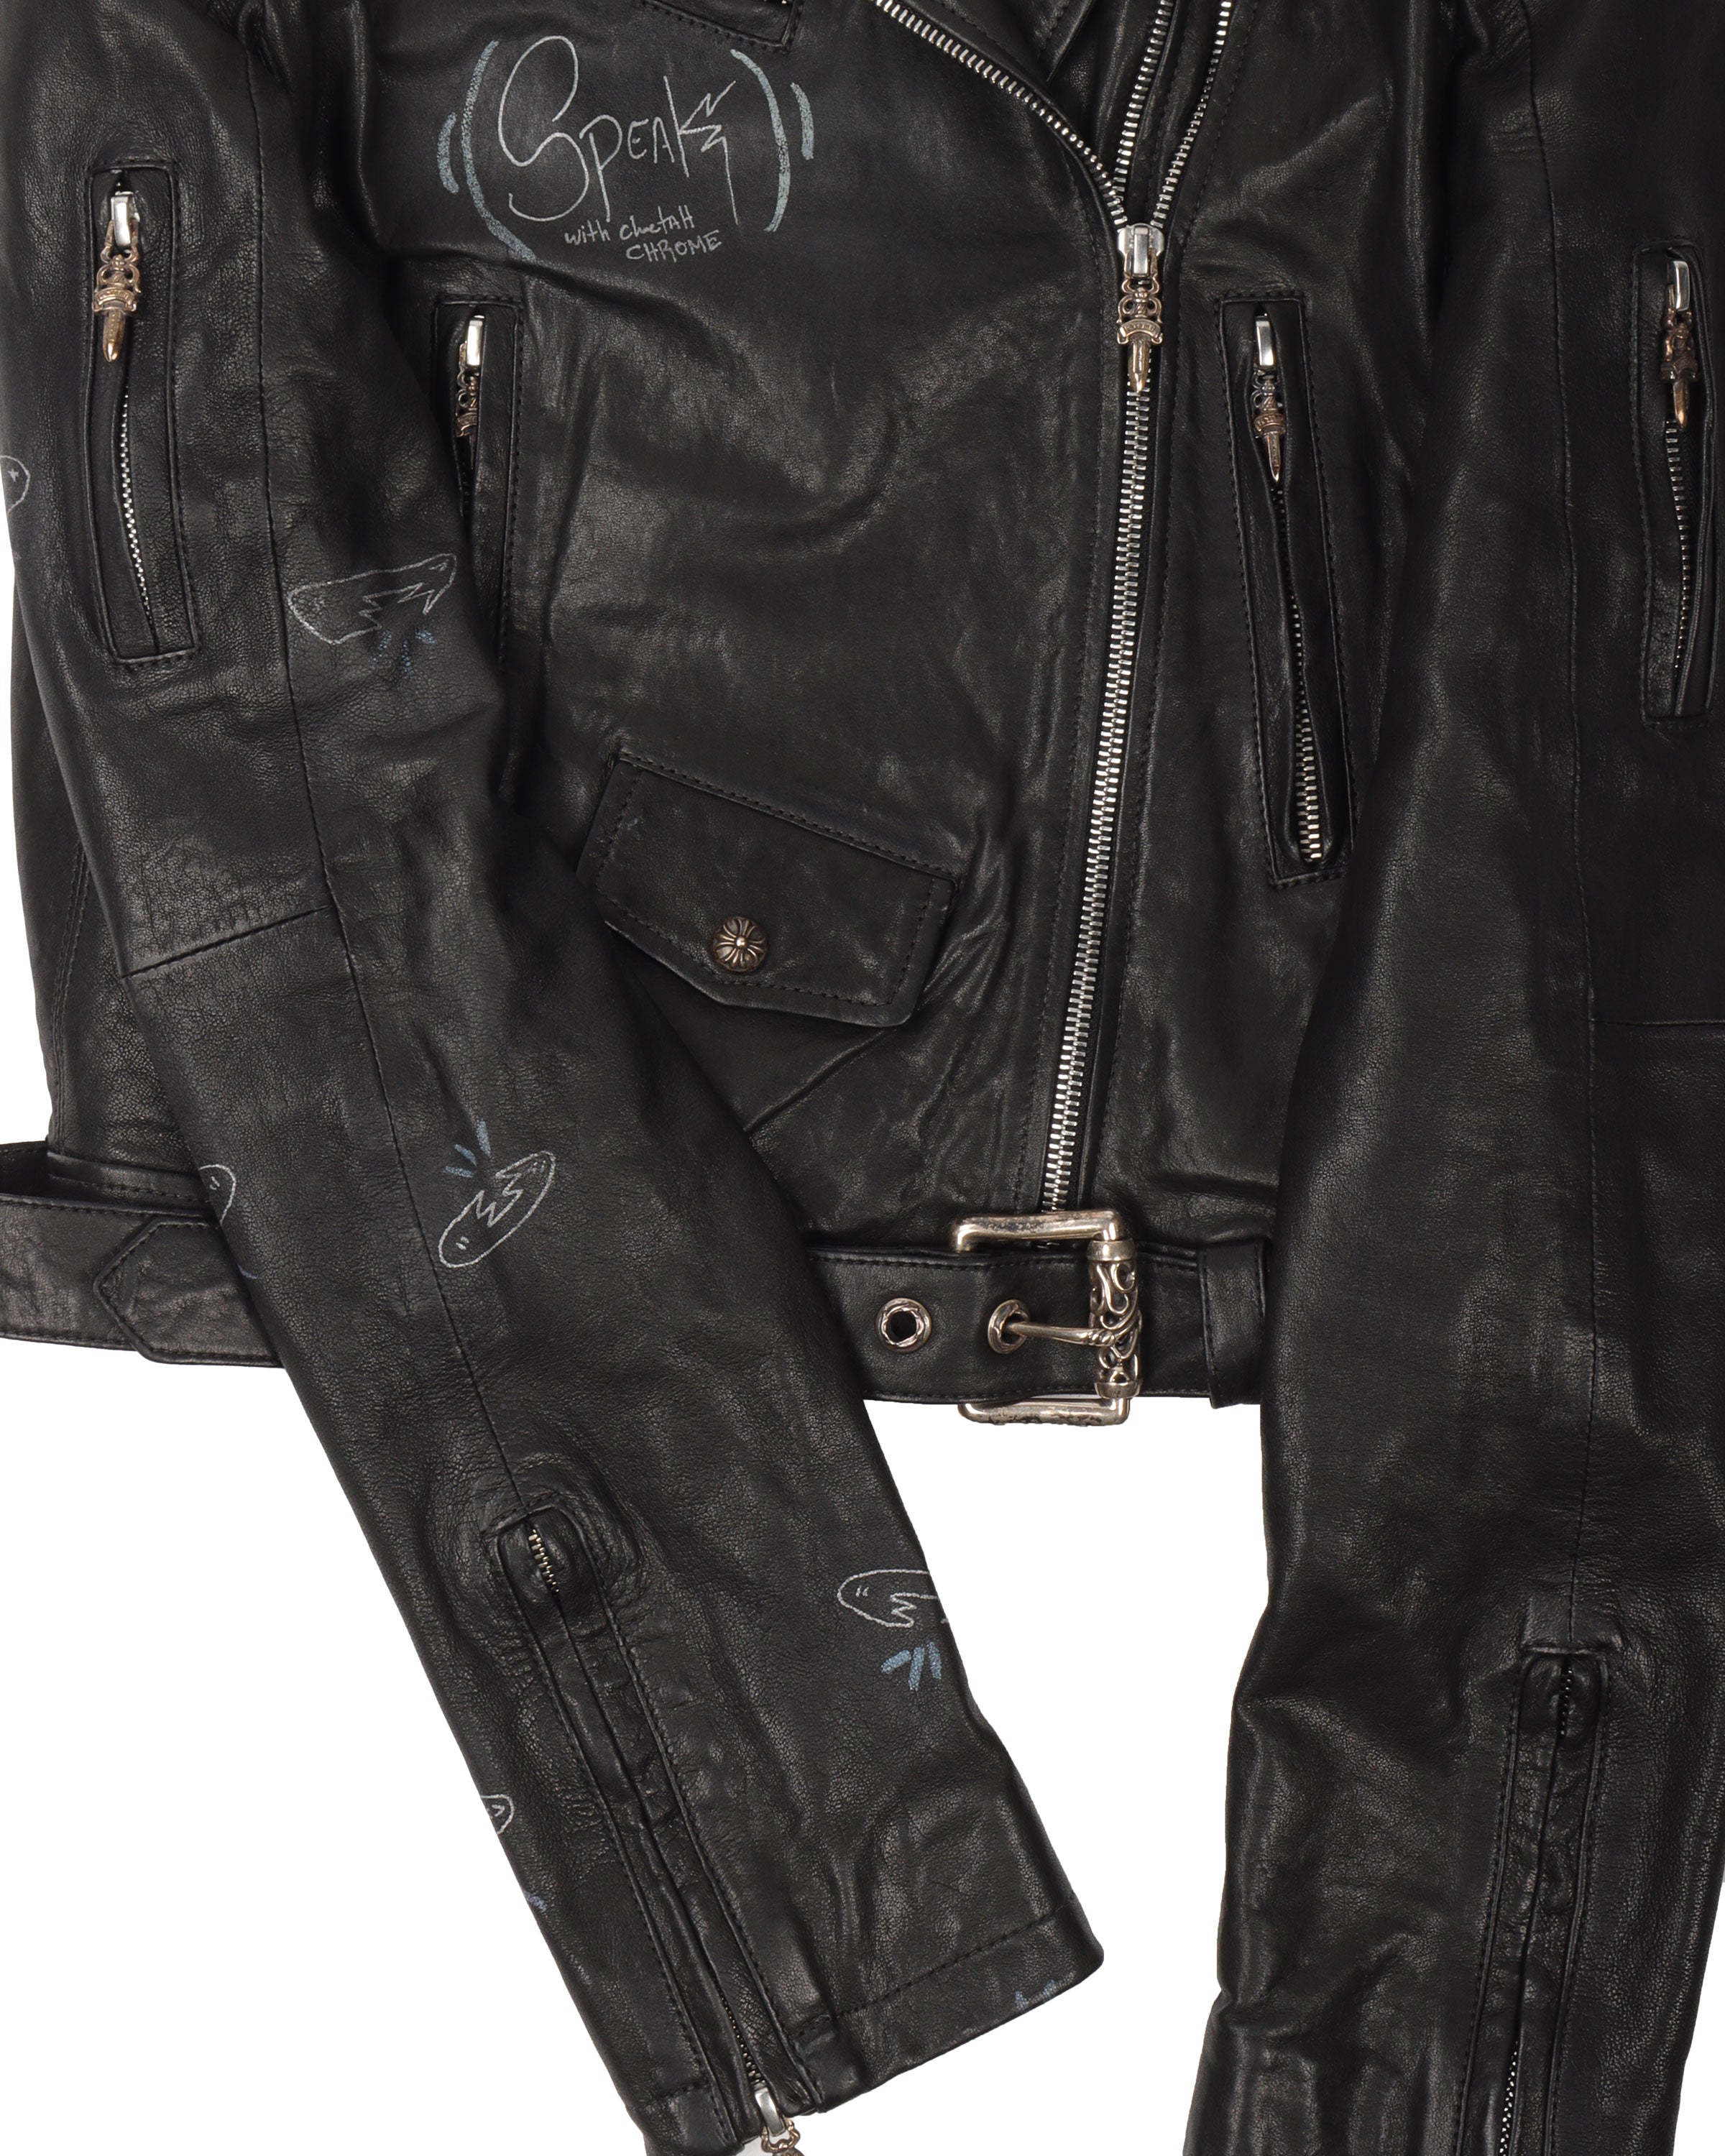 Matty Boy Patch Leather Jacket